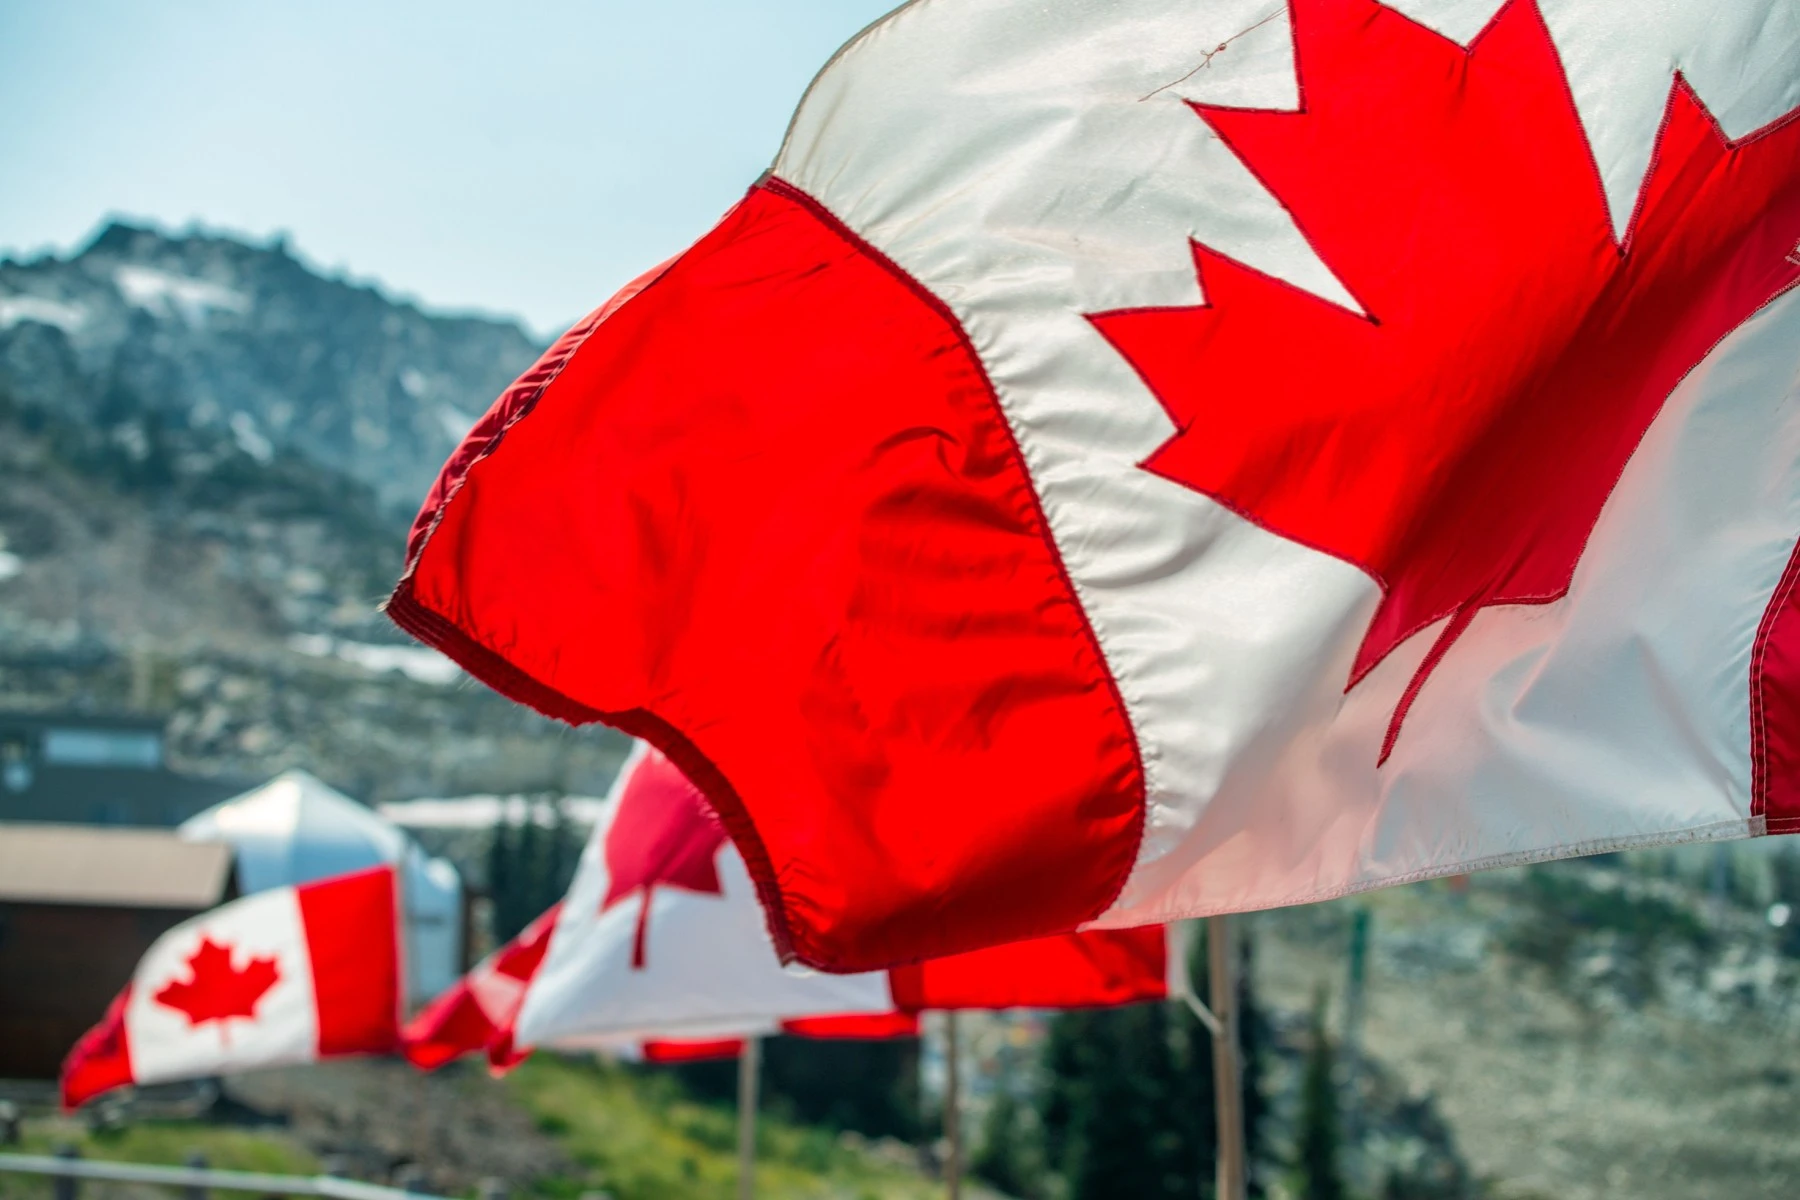 Canada National Flag